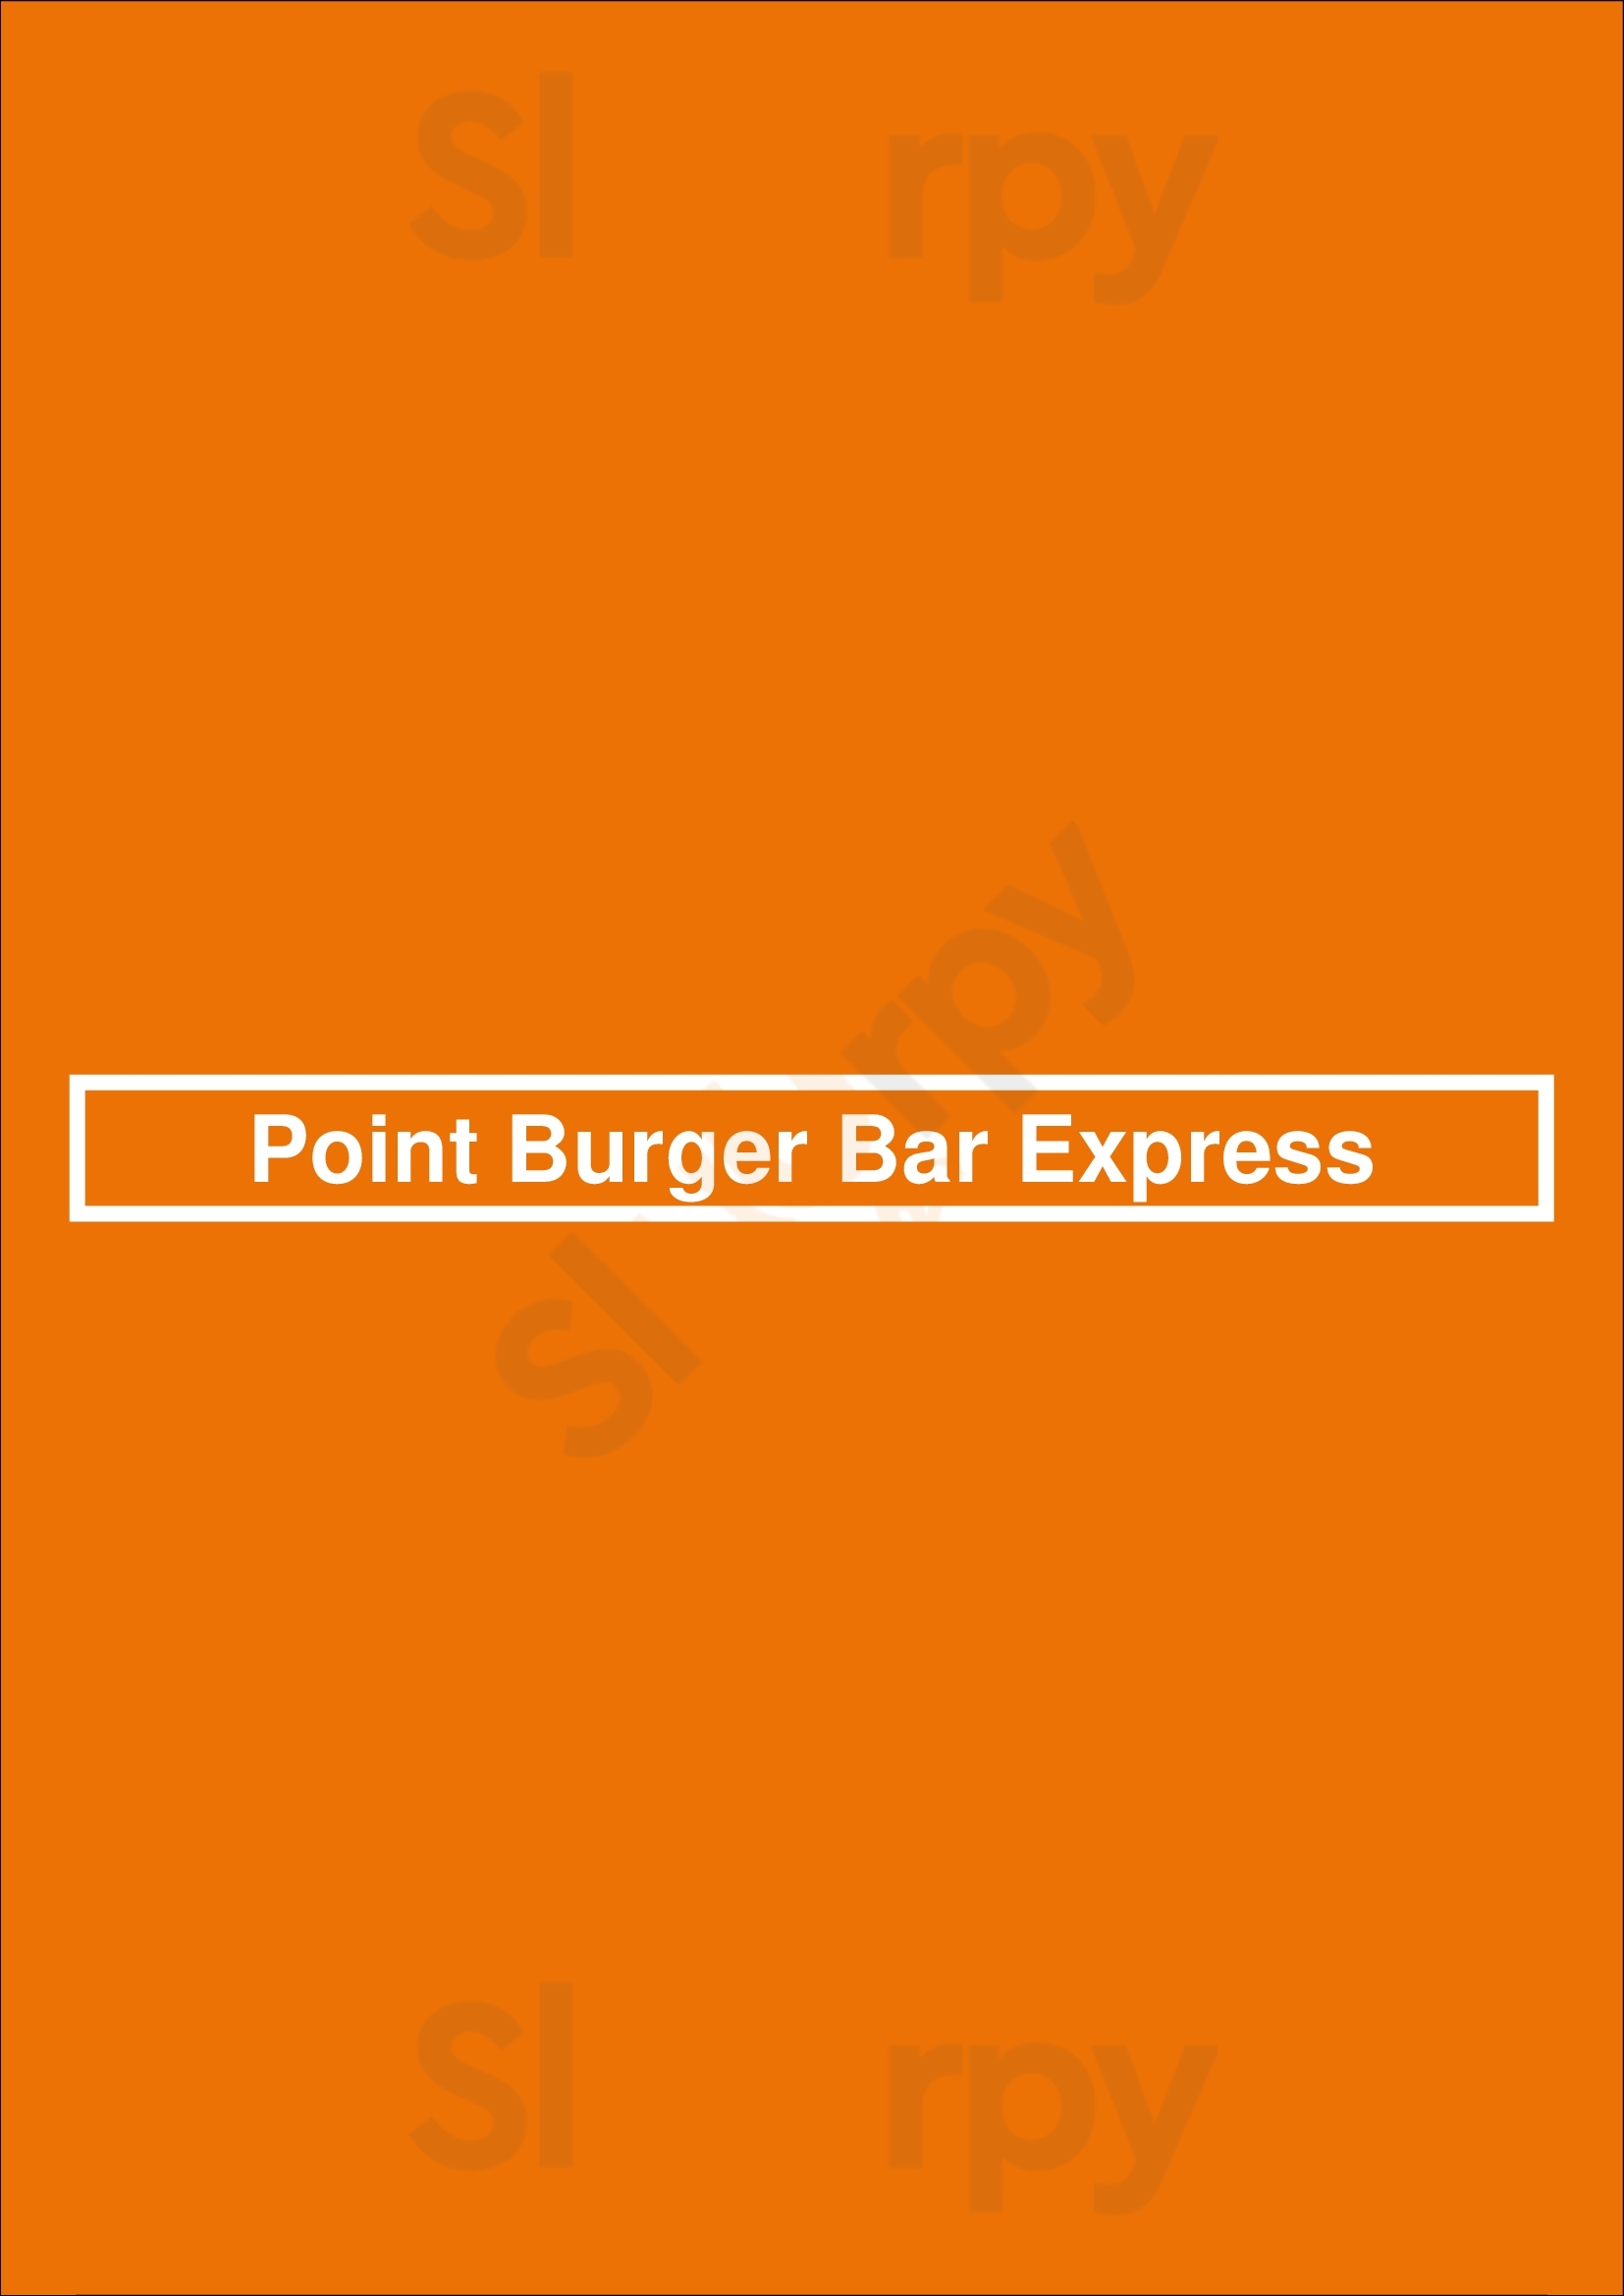 Point Burger Bar Express Milwaukee Menu - 1